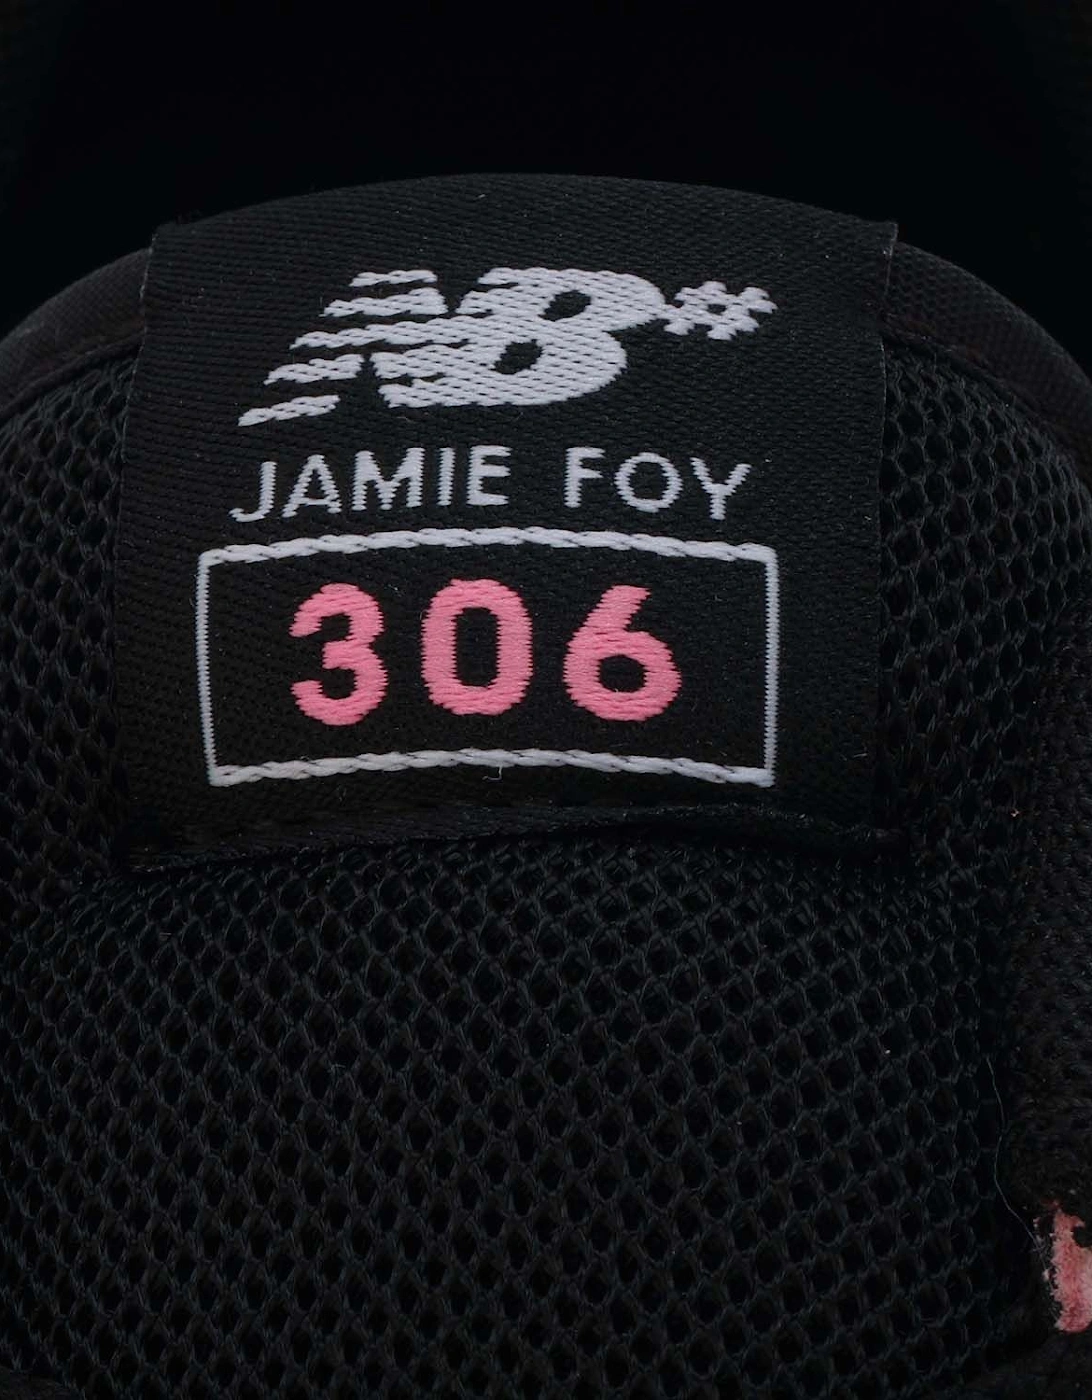 Numeric Jamie Foy 306 Shoes